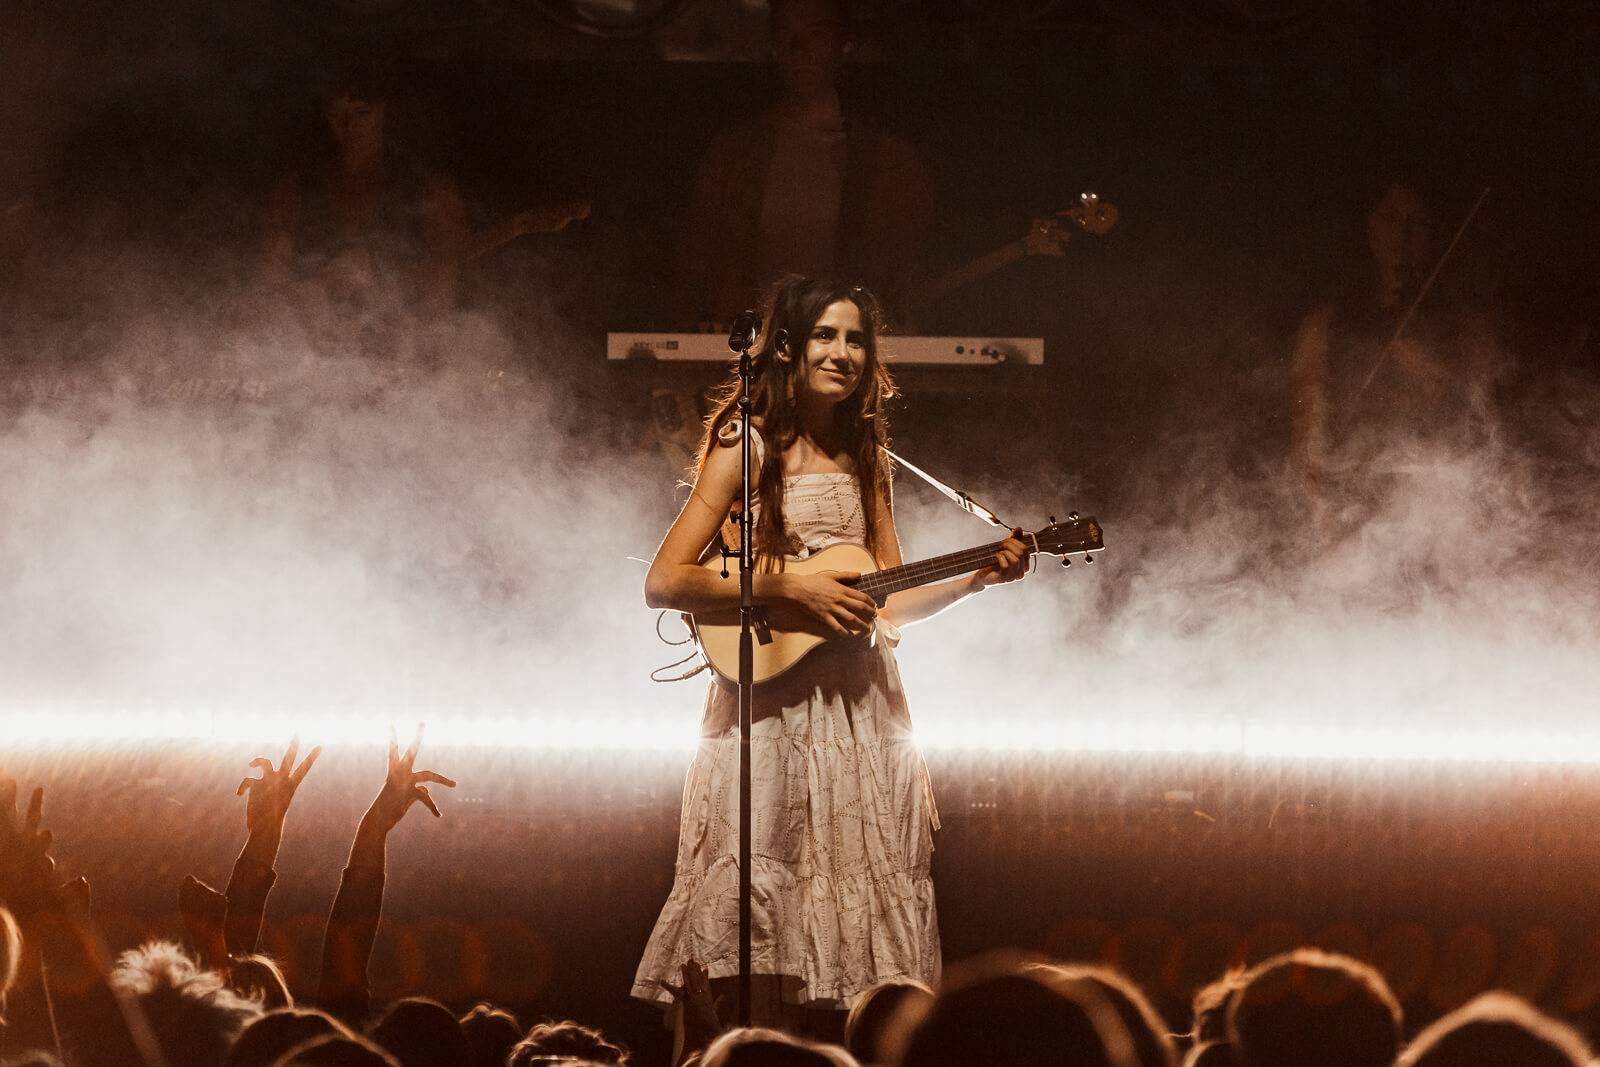 Dodie si podmanila pražské publikum, na pódiu střídala kytaru s ukulele, pianem i klarinetem